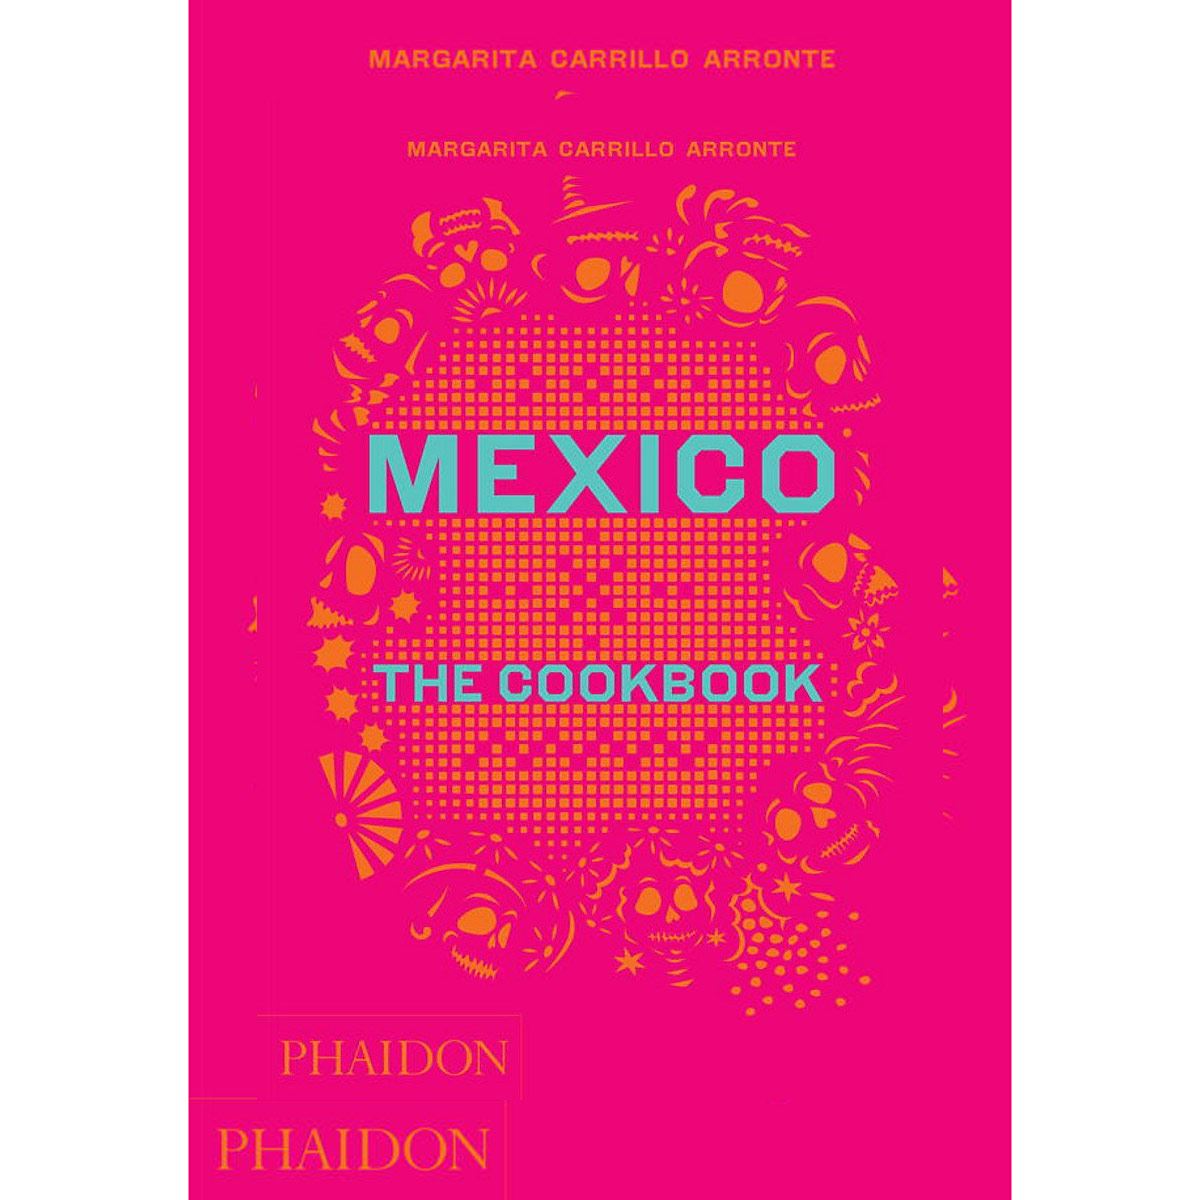 México. The Cookbook